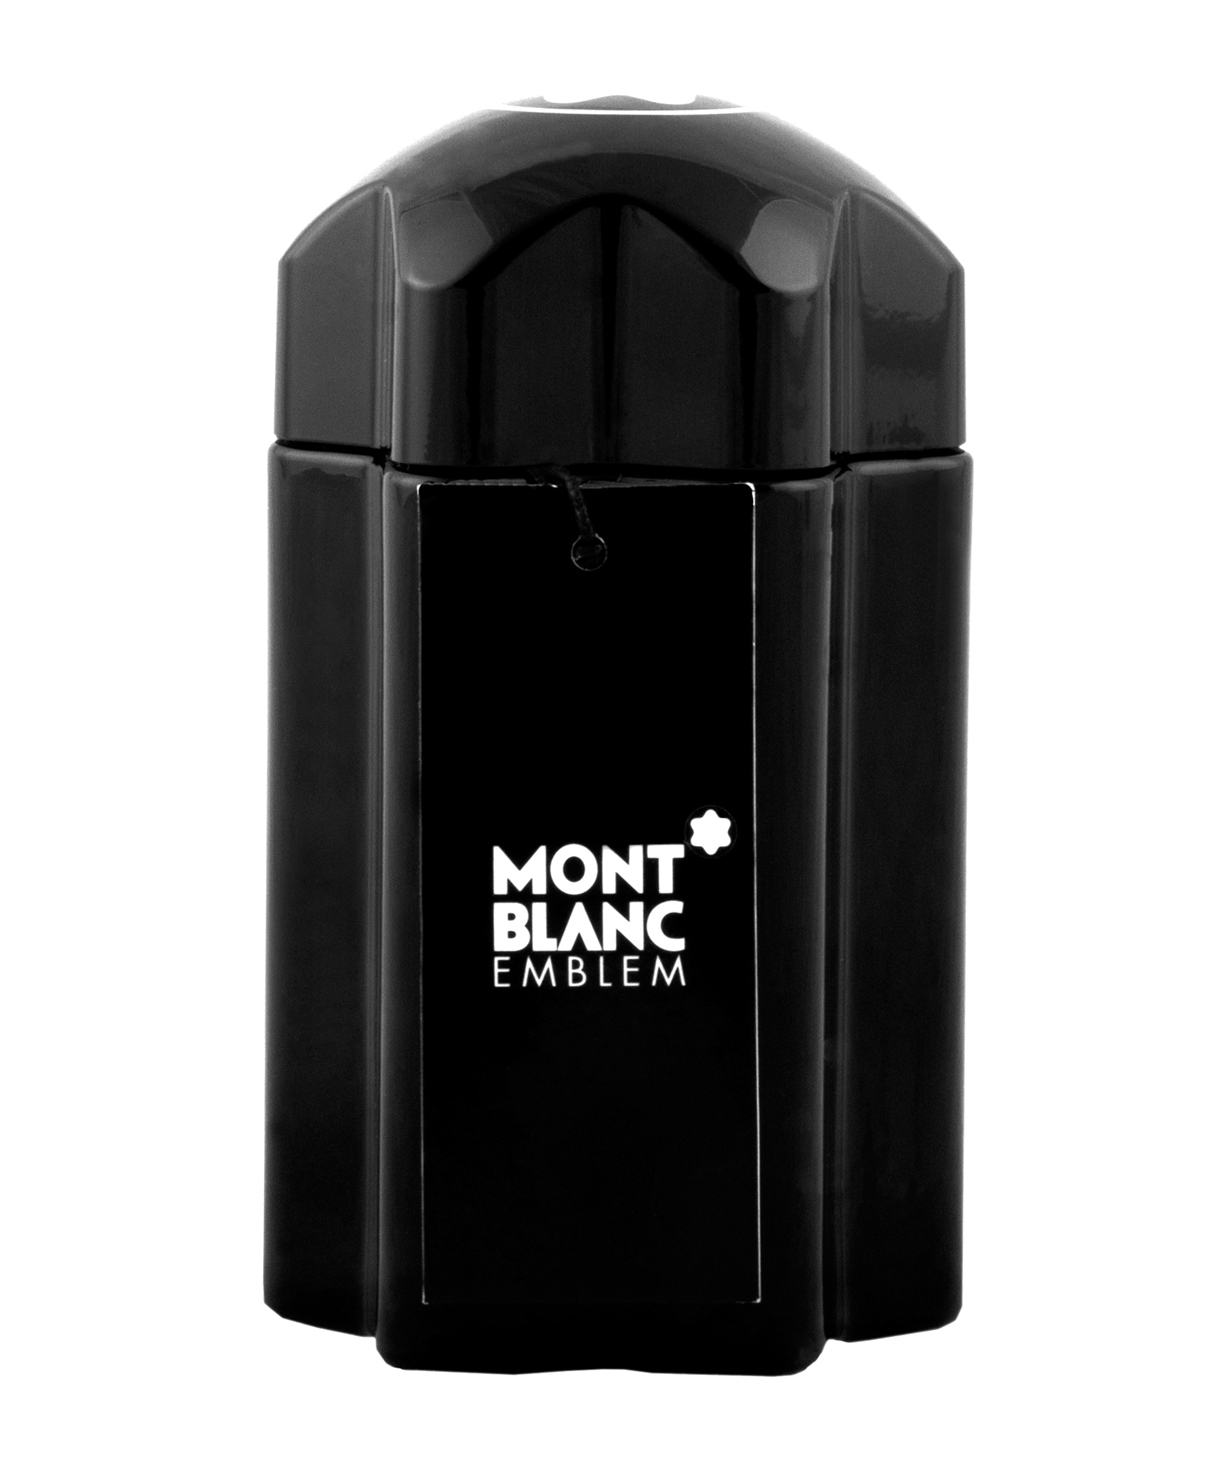 Perfume «Montblanc» Emblem, for men, 100 ml